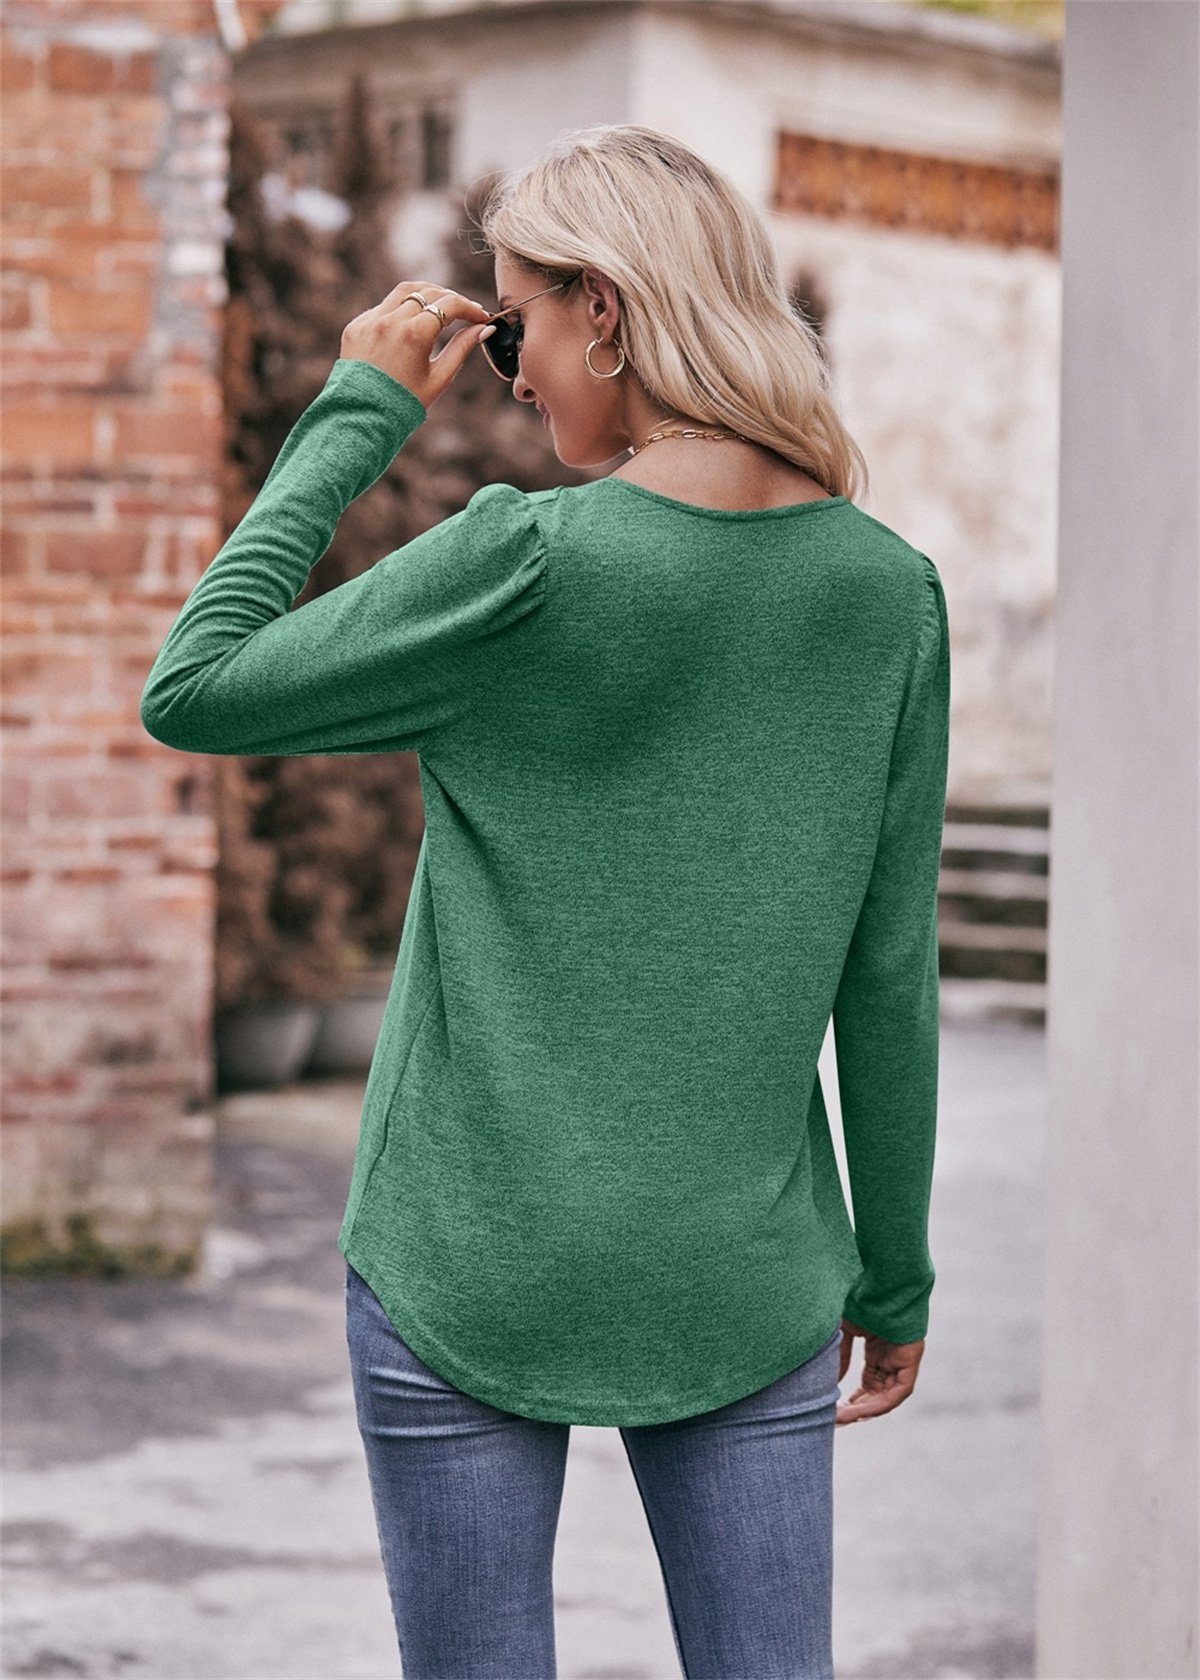 Damen-T-Shirt quadratischem Ausschnitt Puffärmeln carefully Langärmliges und selected Langarmshirt Grün mit